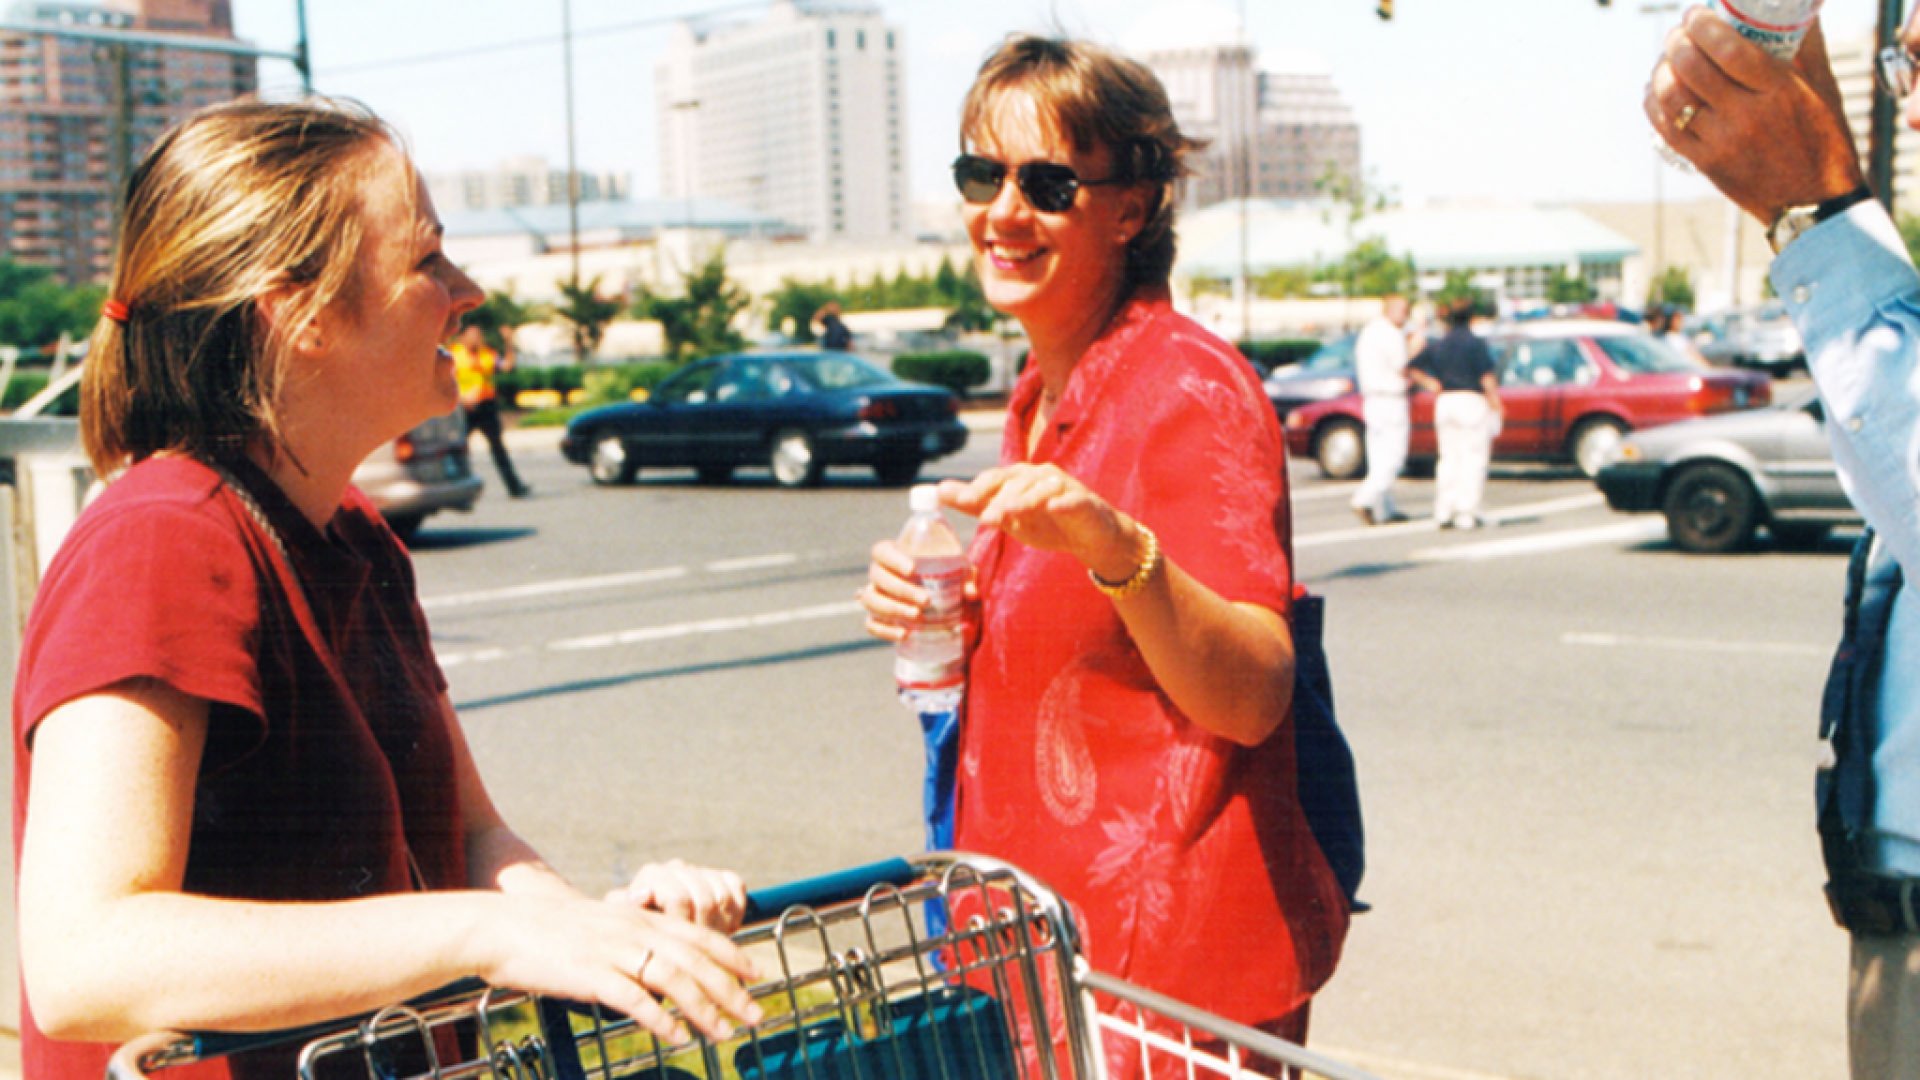 Moira Bohannon handing out water on Sept. 11, 2001.